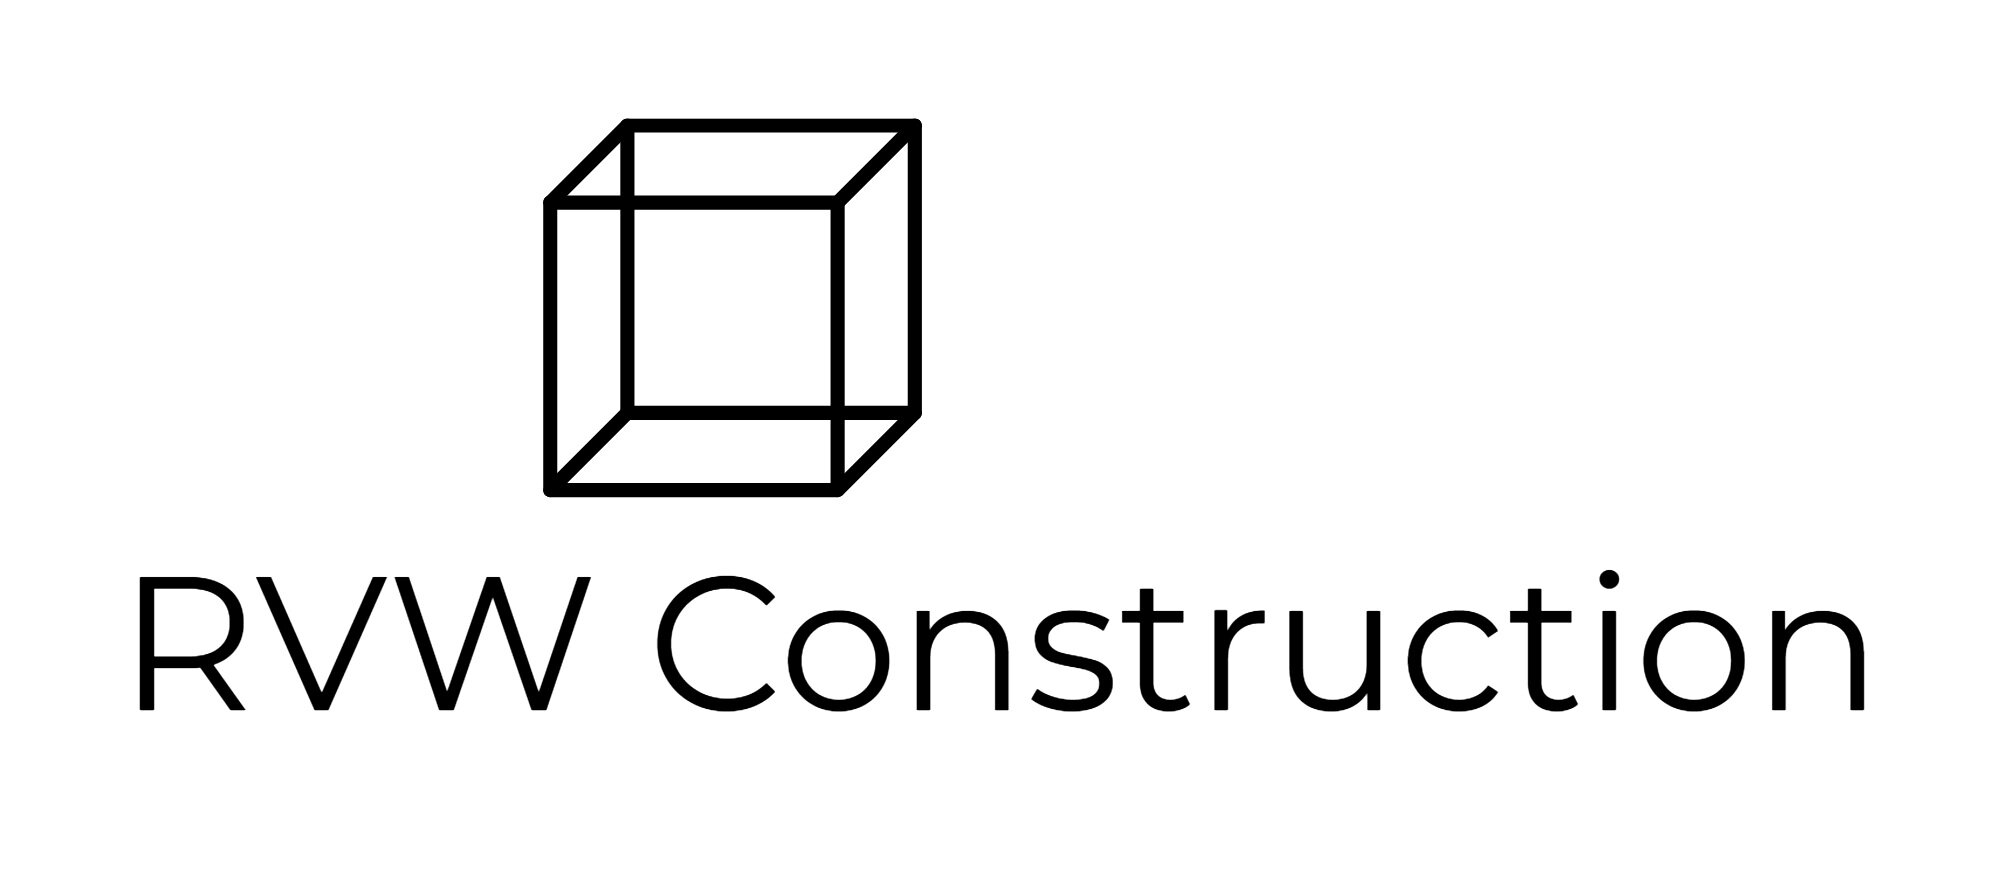 RVW Construction